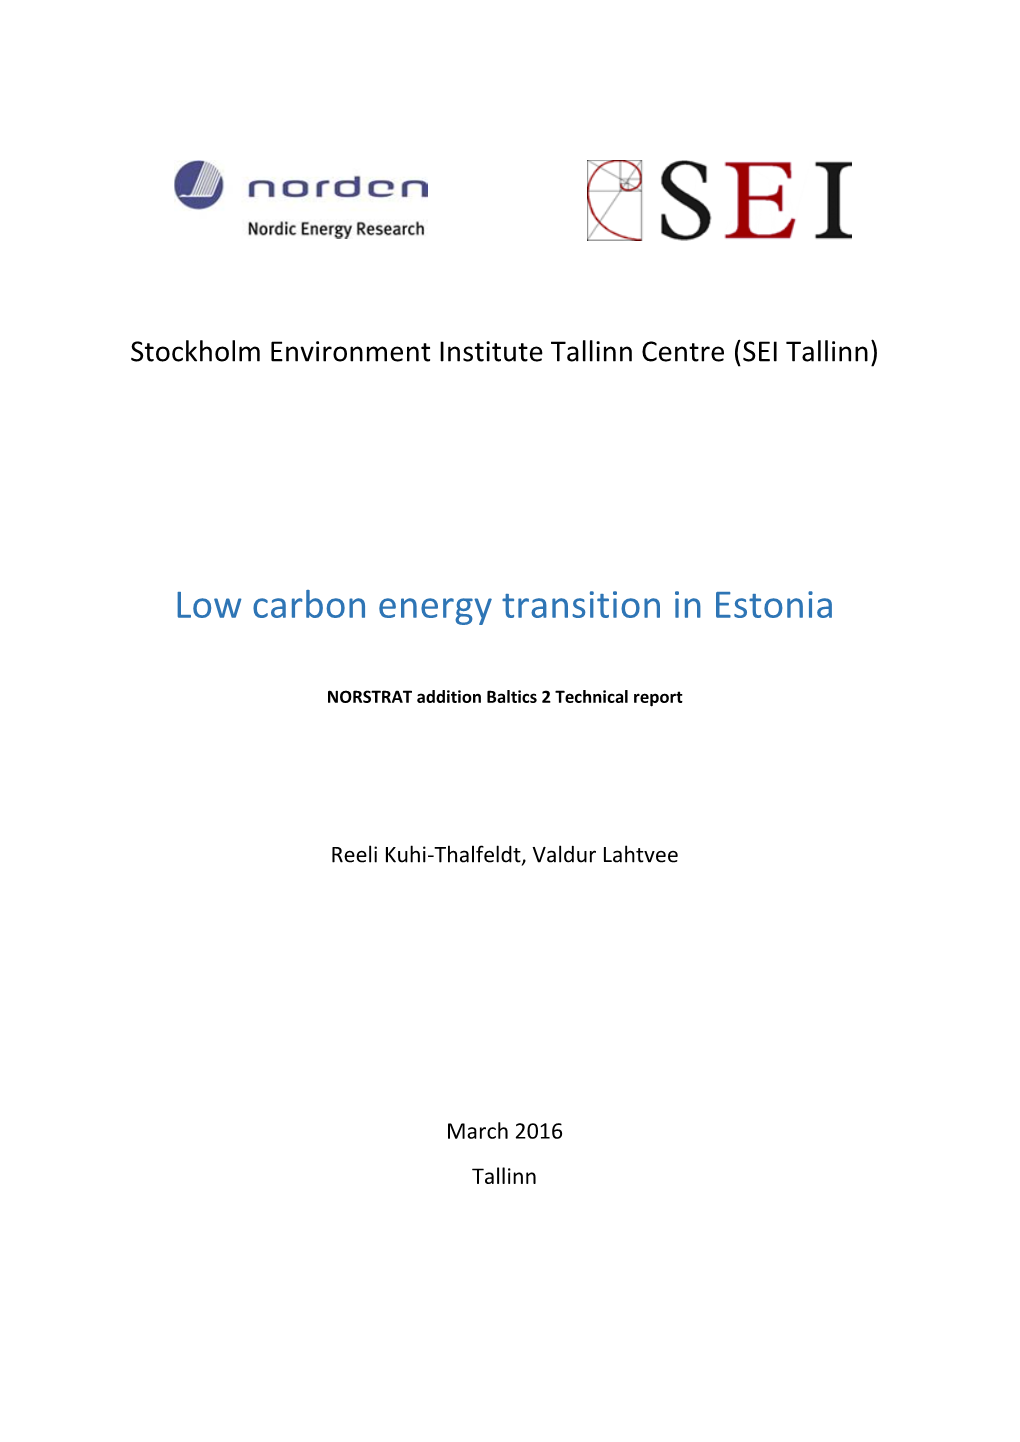 Low Carbon Energy Transition in Estonia